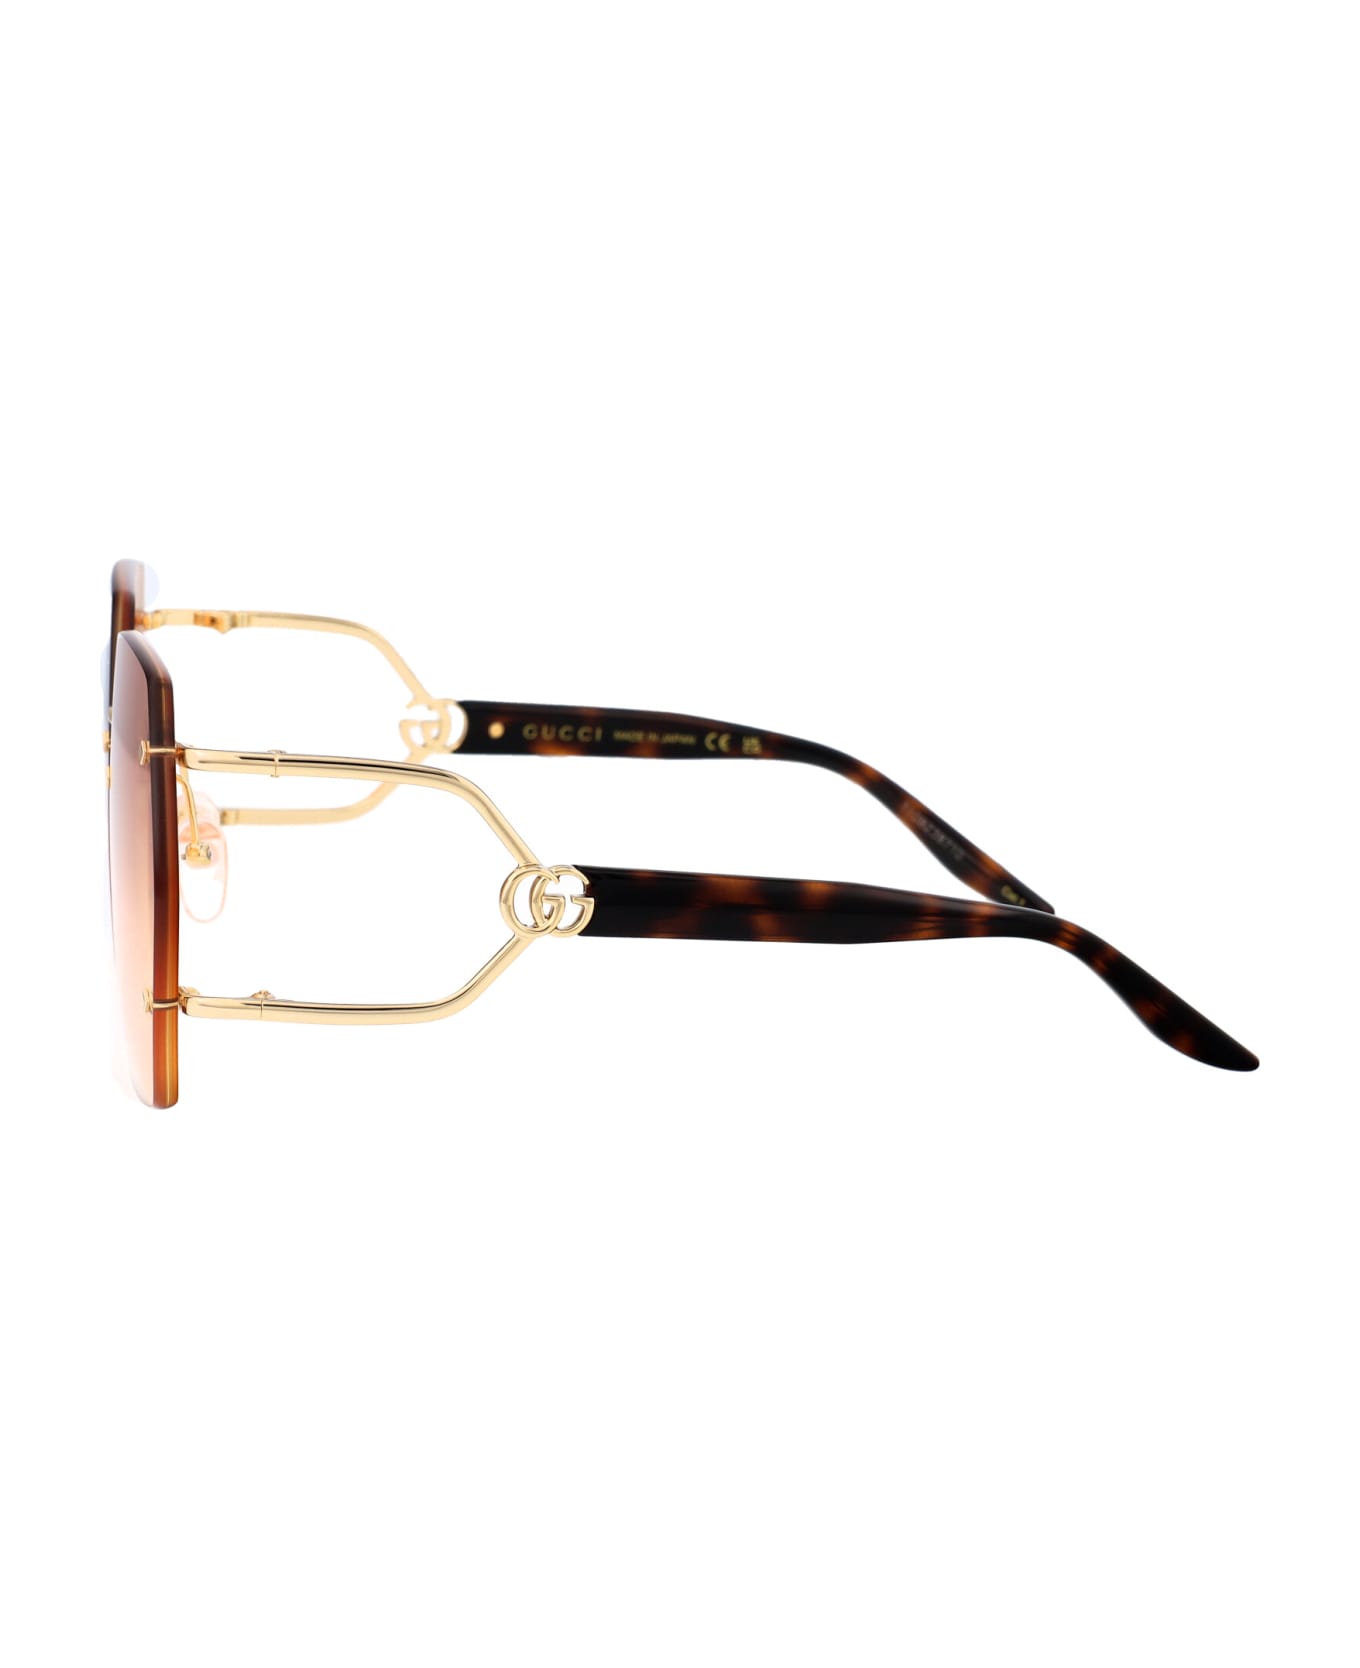 Gucci Eyewear Gg1562s Sunglasses - 003 GOLD HAVANA ORANGE サングラス